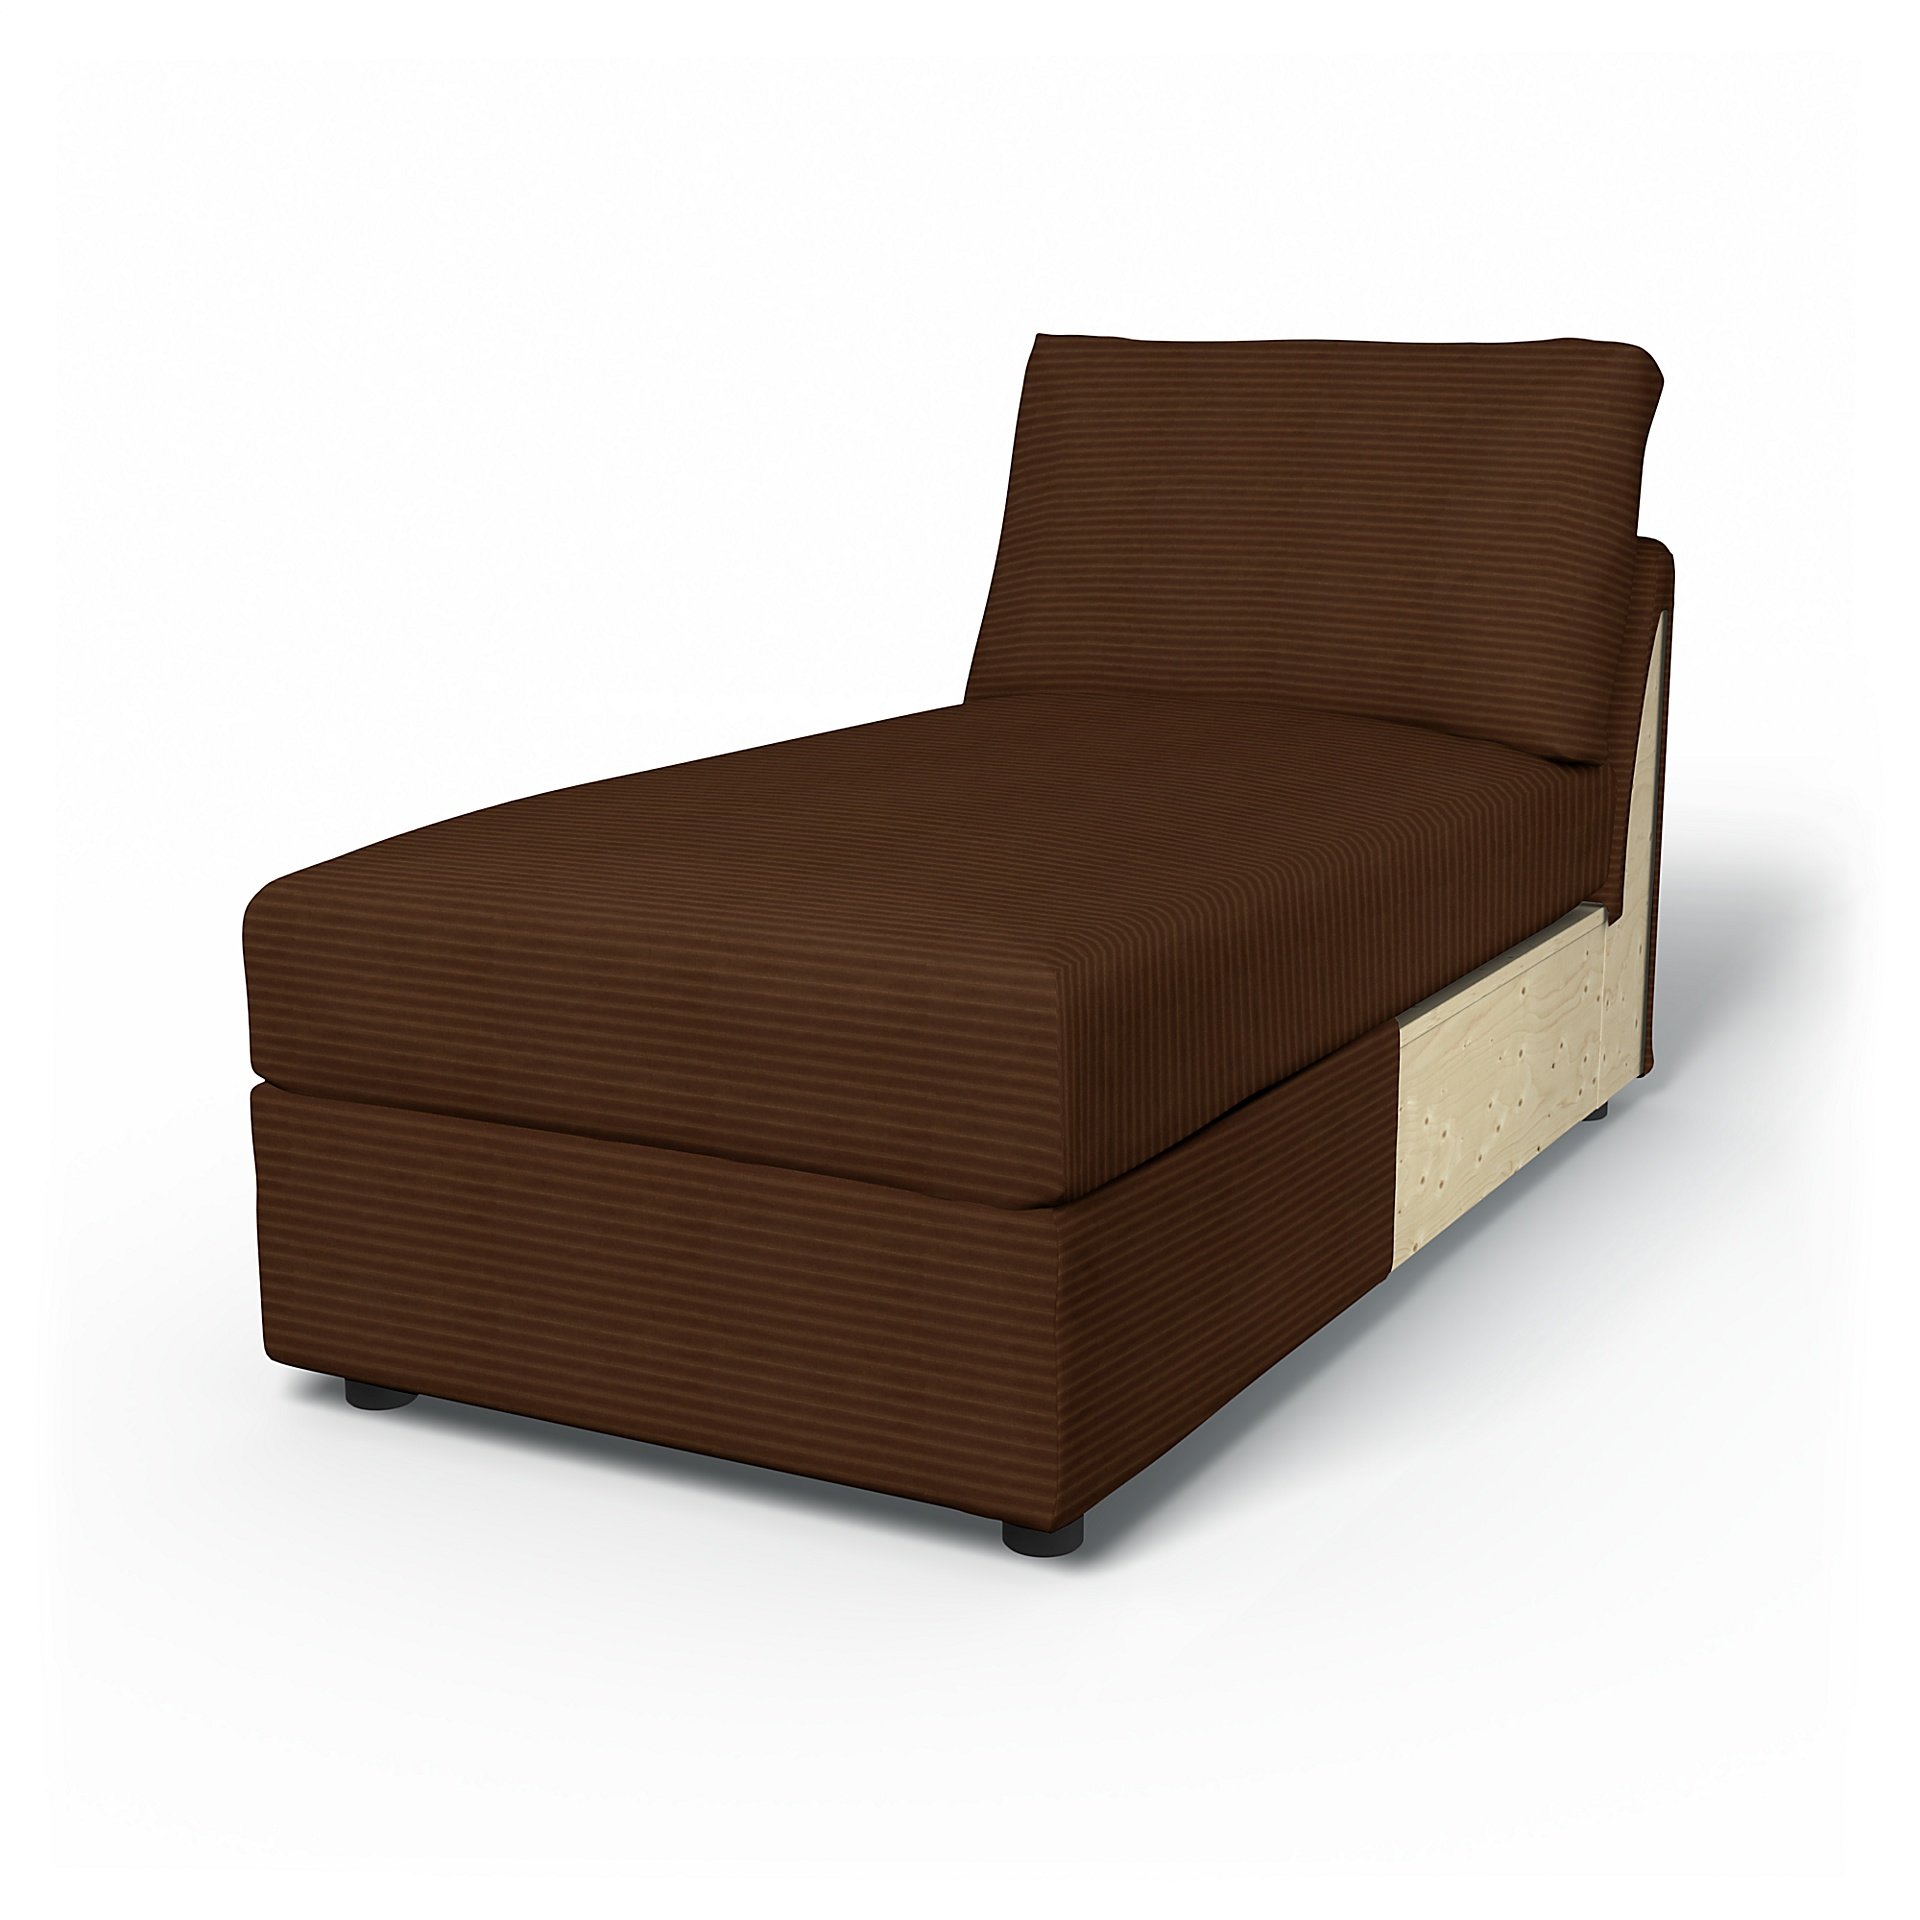 IKEA - Vimle Chaise Longue Cover, Chocolate Brown, Corduroy - Bemz